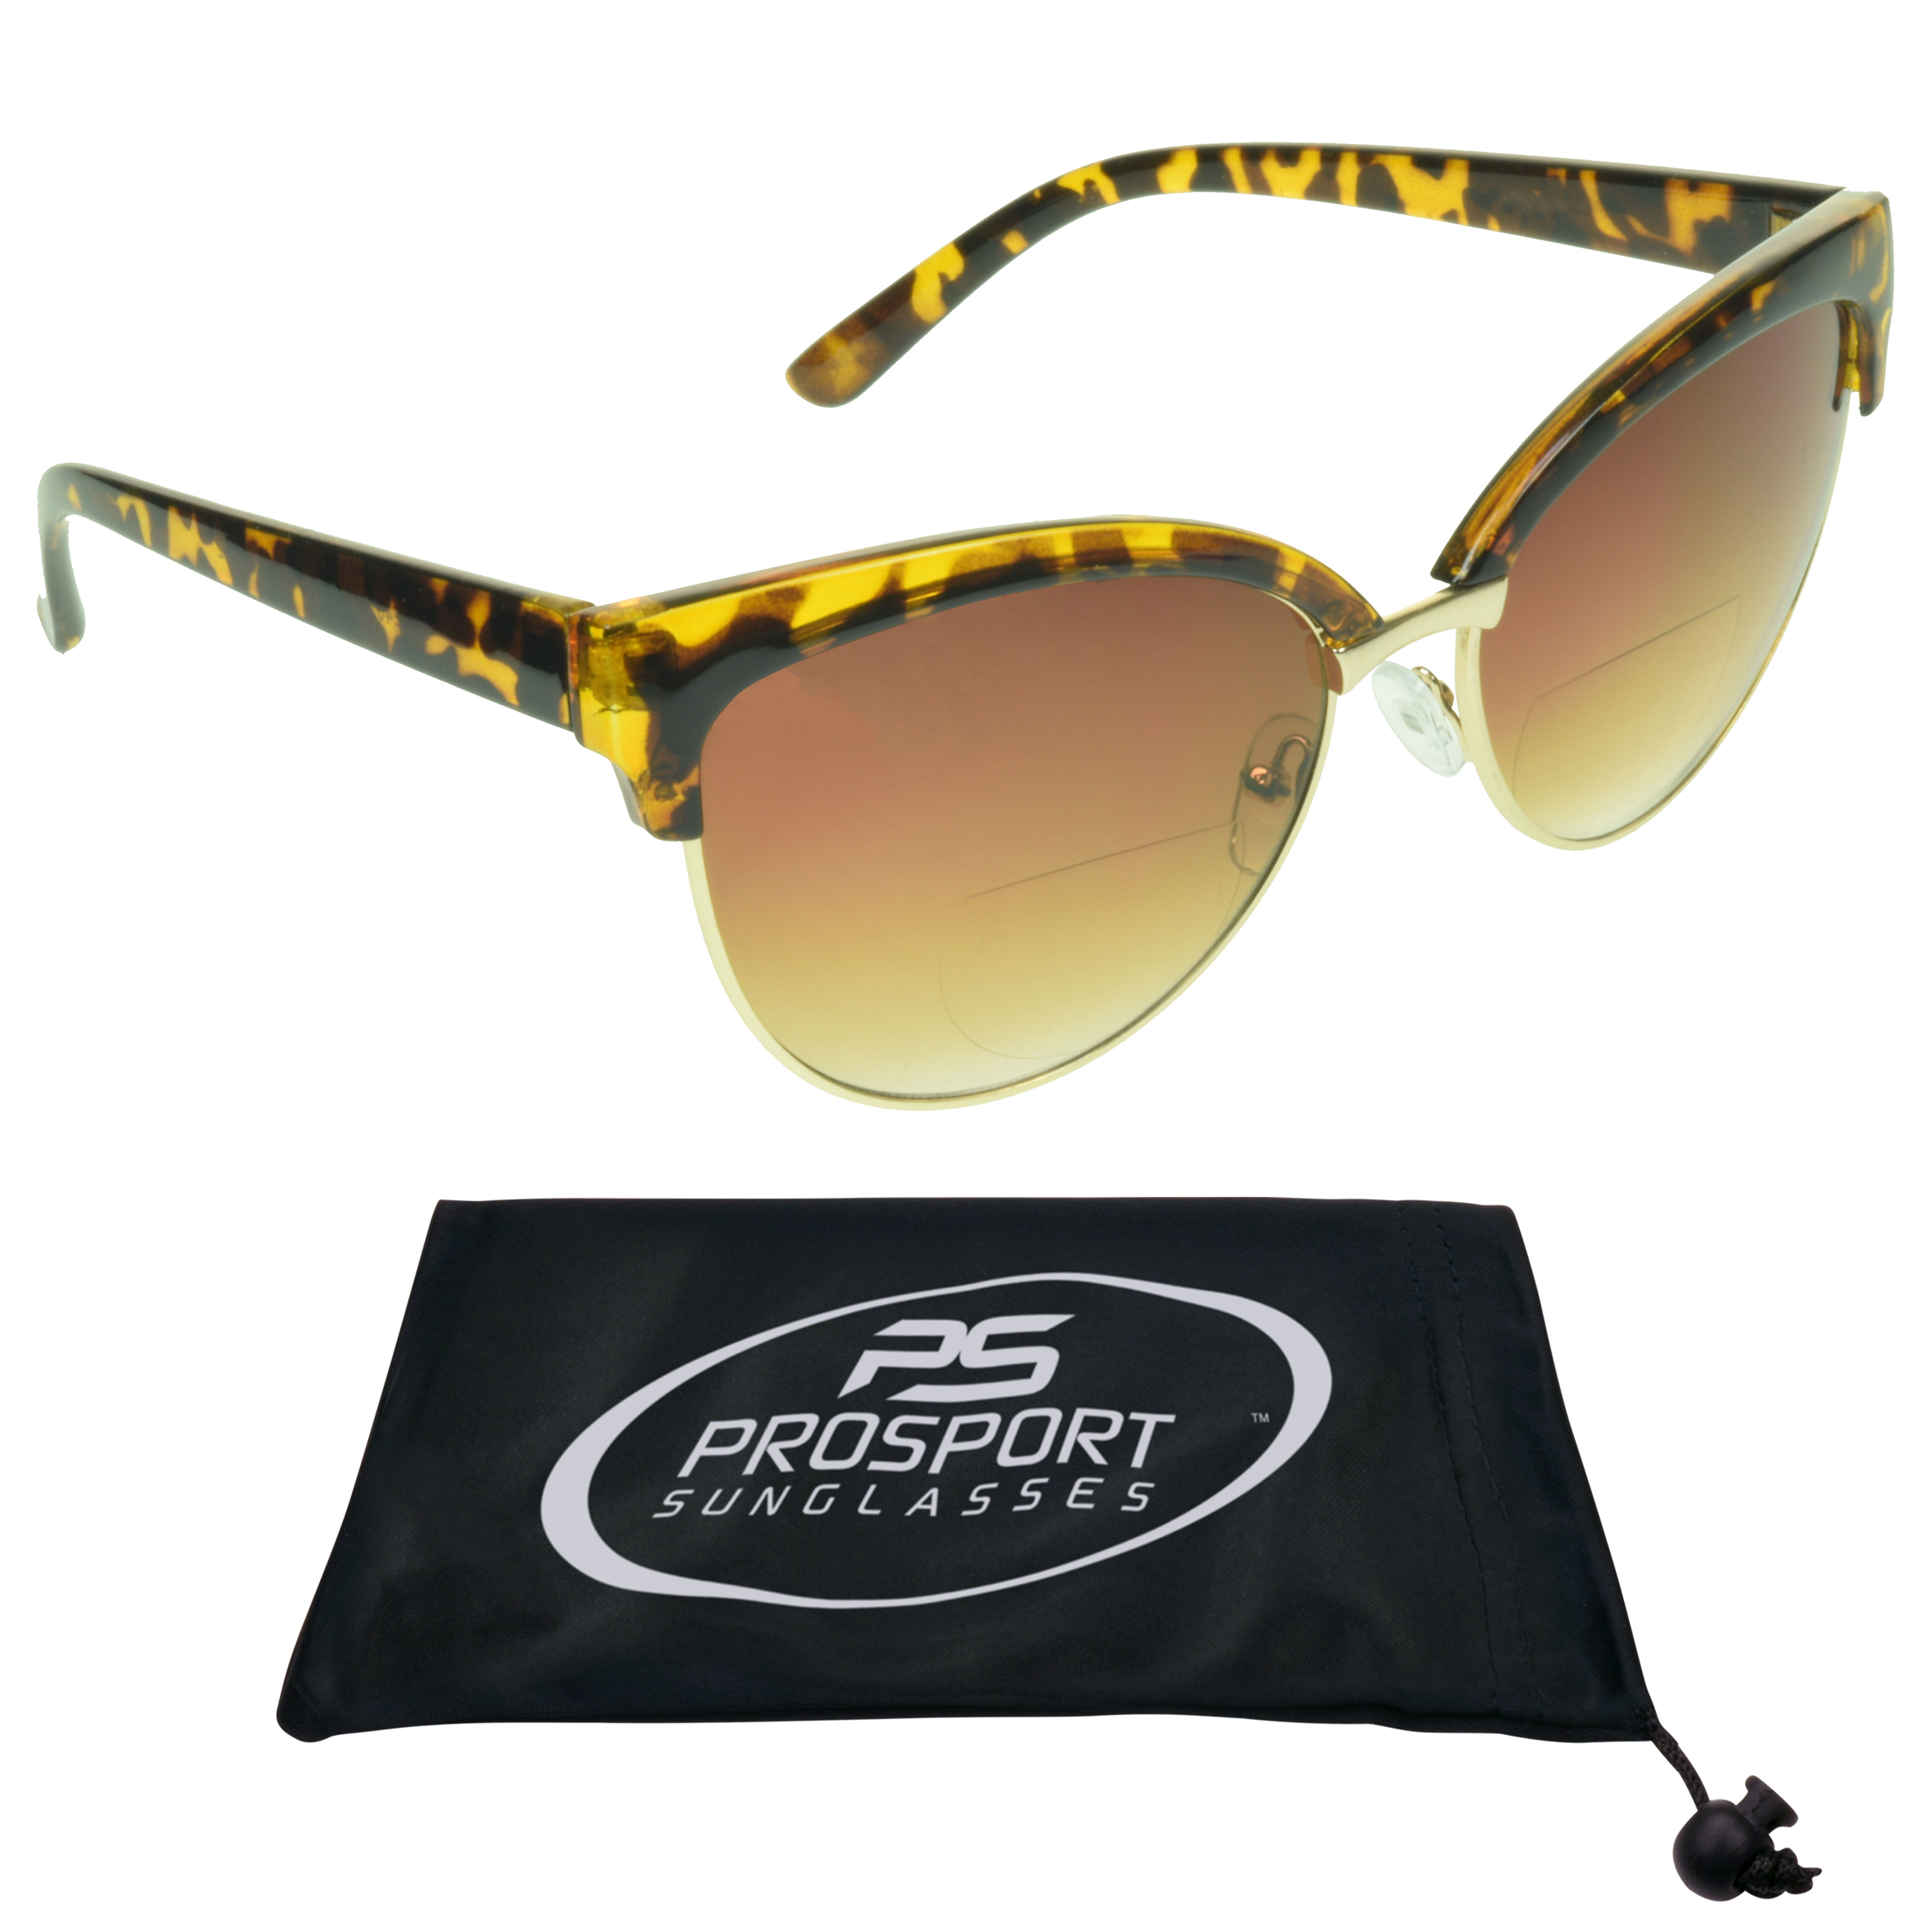 proSPORT Women Bifocal Reading Cateye Fashion Horn Rim Sunglasses Tortoise Gold Frame Brown Lens +3.00 - image 1 of 5